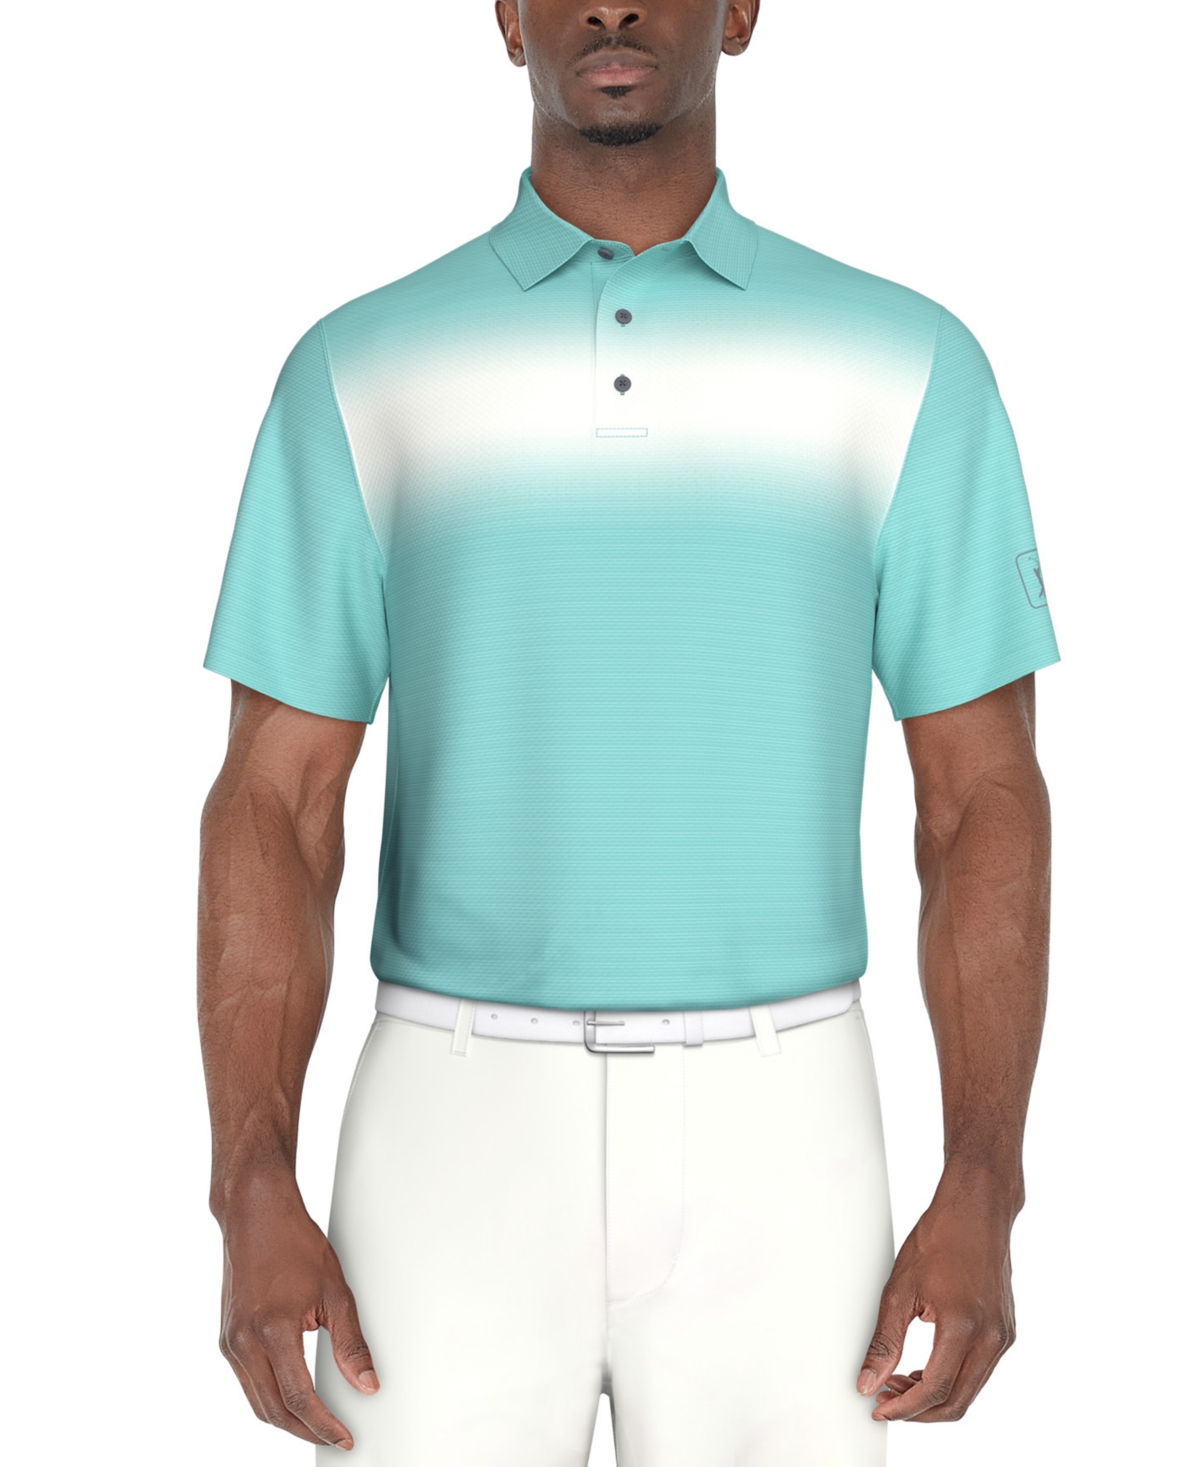 Pga Tour Men's Short Sleeve Textured Performance Polo Shirt In Blue Curac